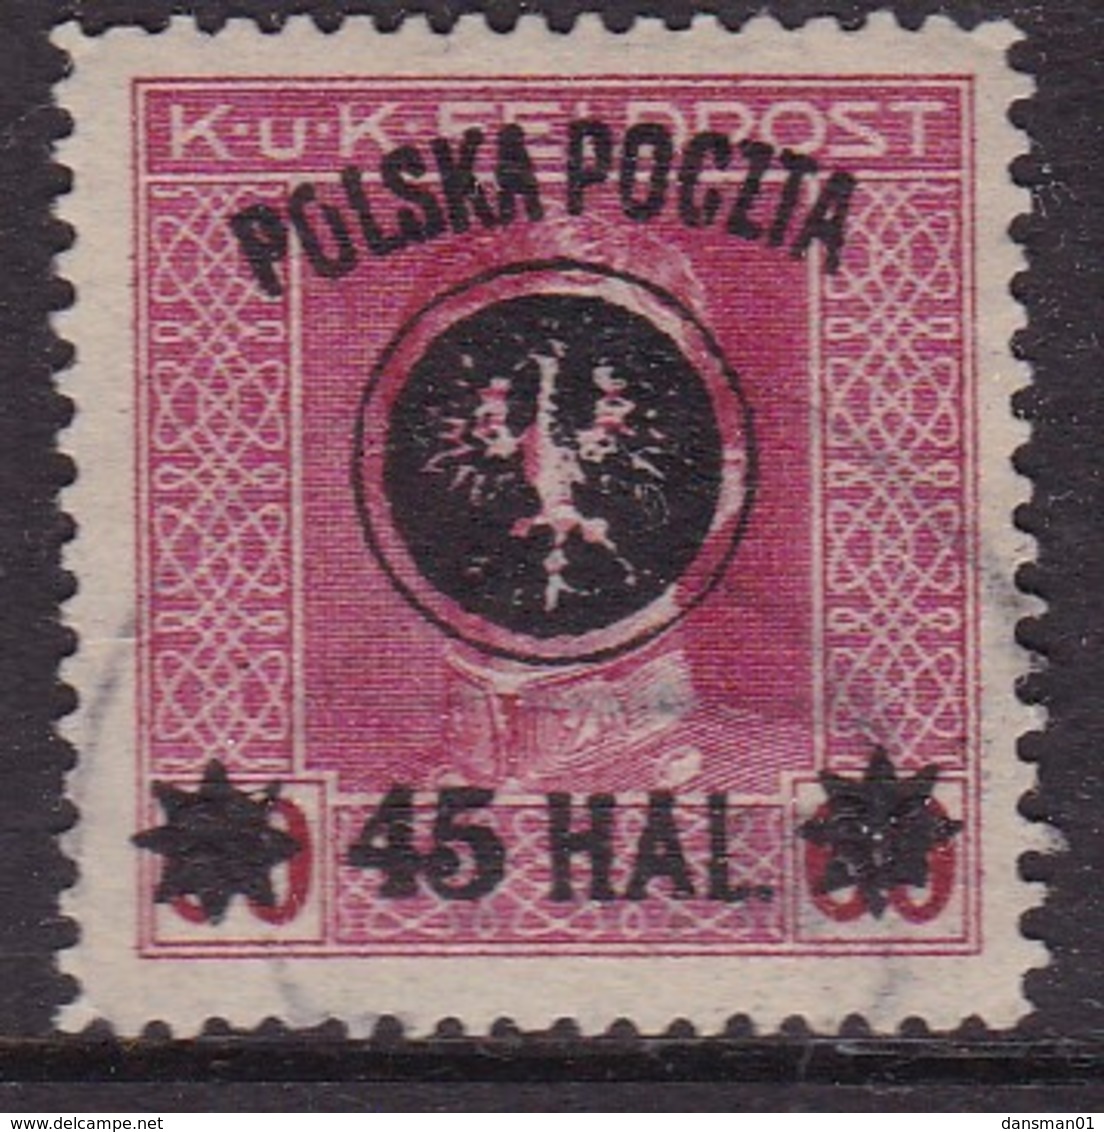 POLAND 1918 Lublin Fi 24 Used Forgery - Gebraucht